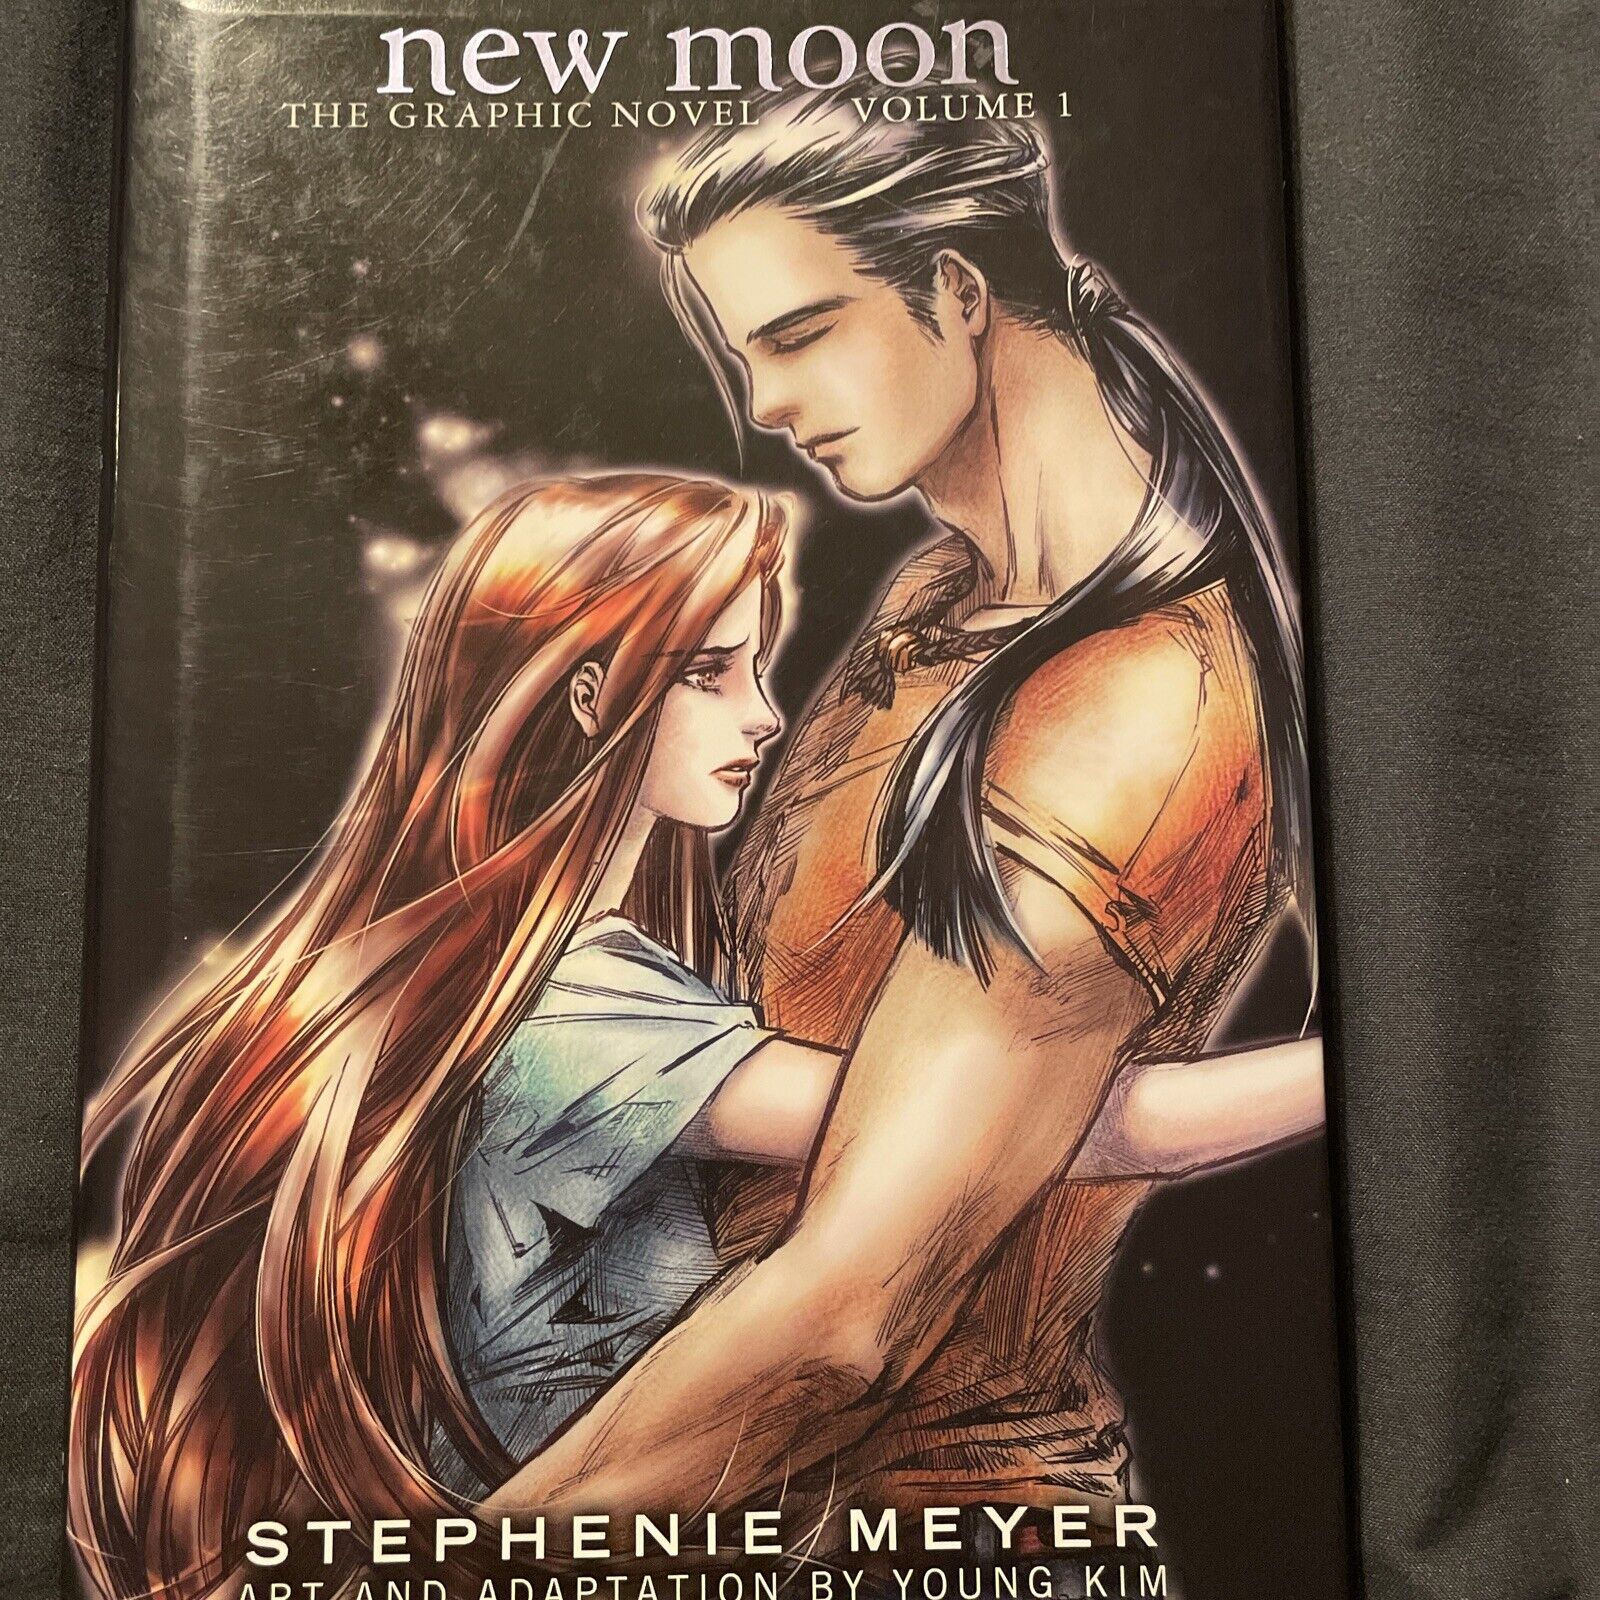 The Twilight Saga New Moon: Graphic Novel, Vol. 1 by Stephenie Meyer 1st Print 